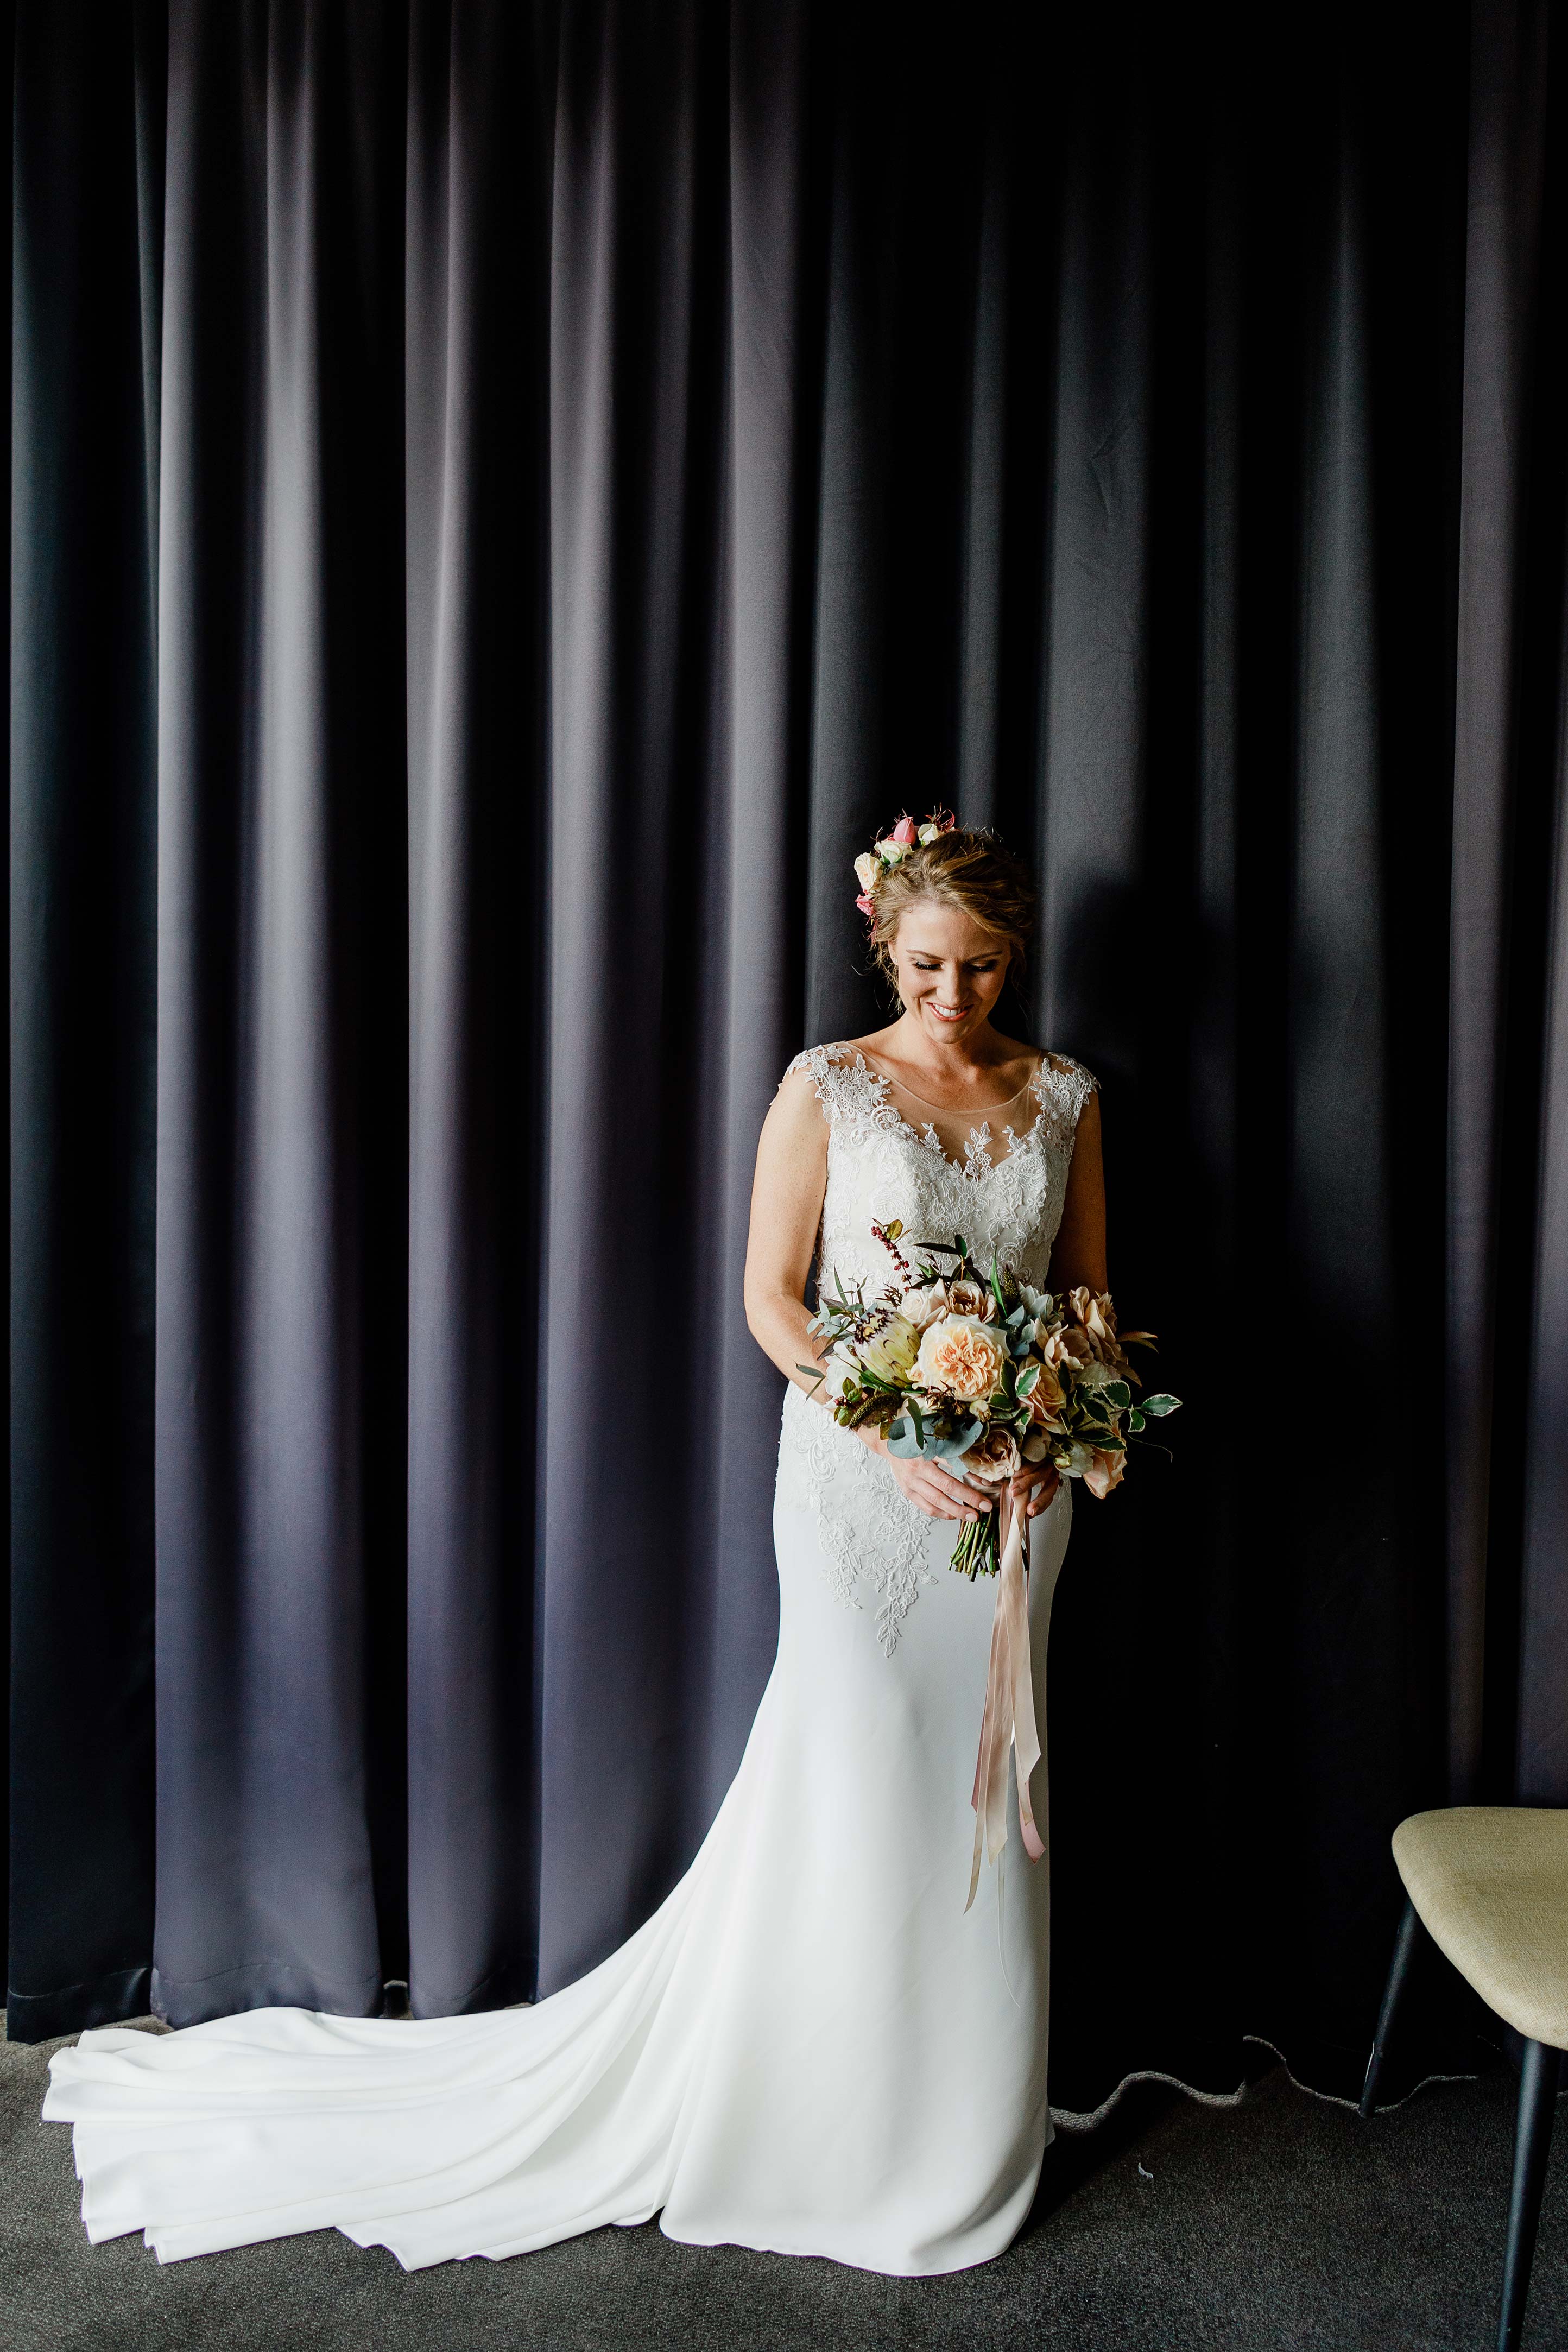 Melbourne-Richmond-Top-Paddock-Wedding-Photographer-bride